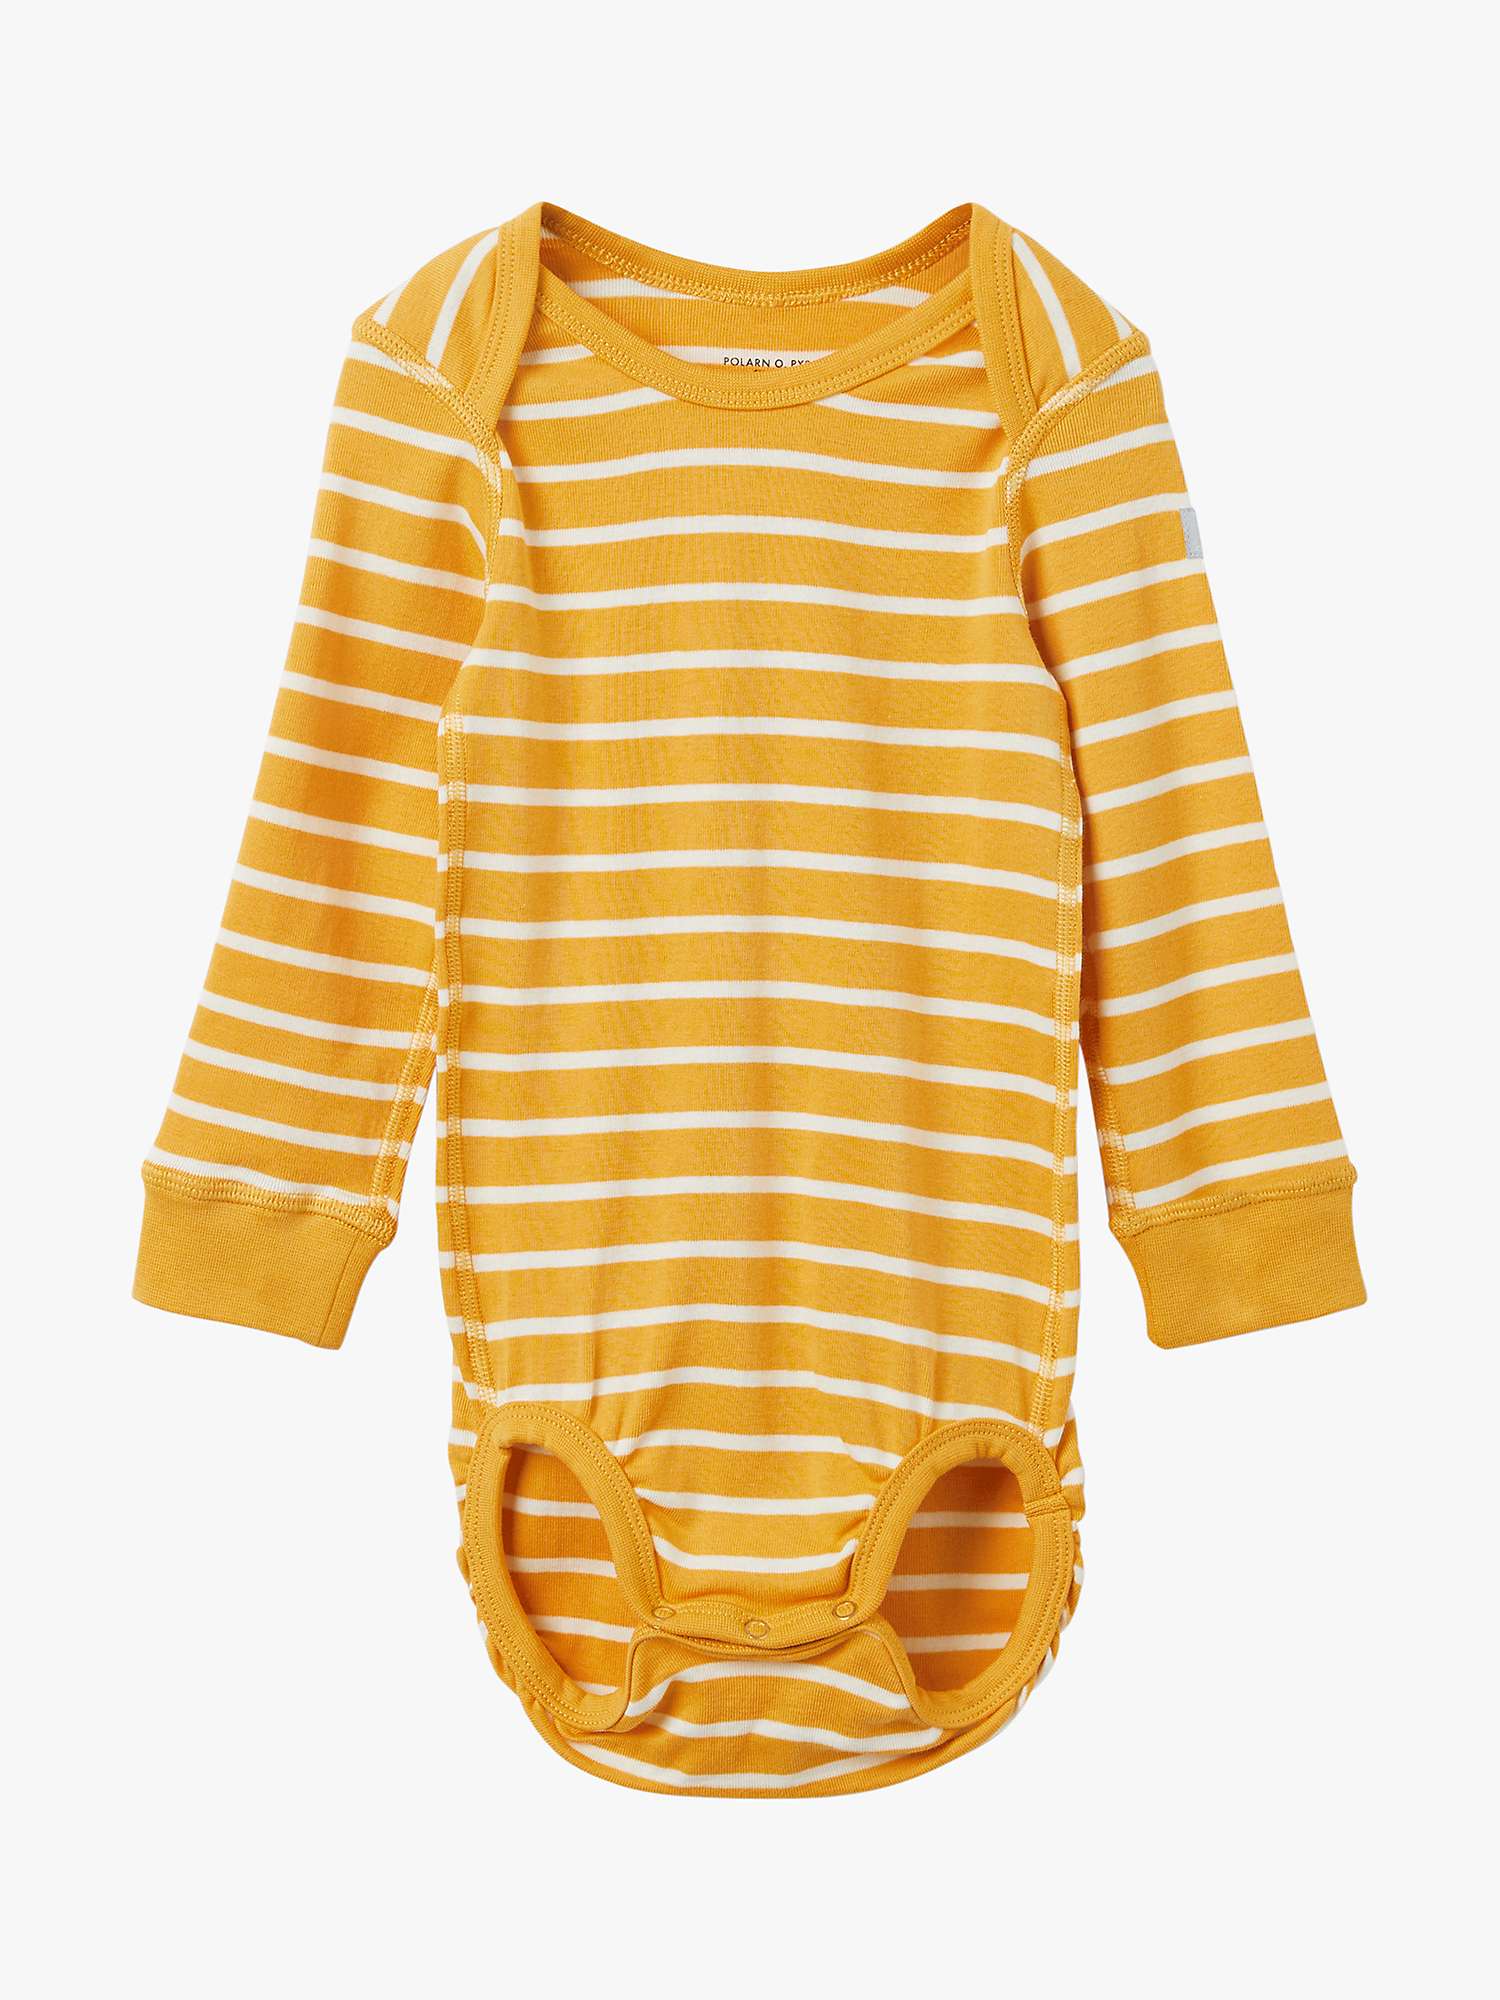 Buy Polarn O. Pyret Baby GOTS Organic Cotton Stripe Envelope Neck Bodysuit Online at johnlewis.com